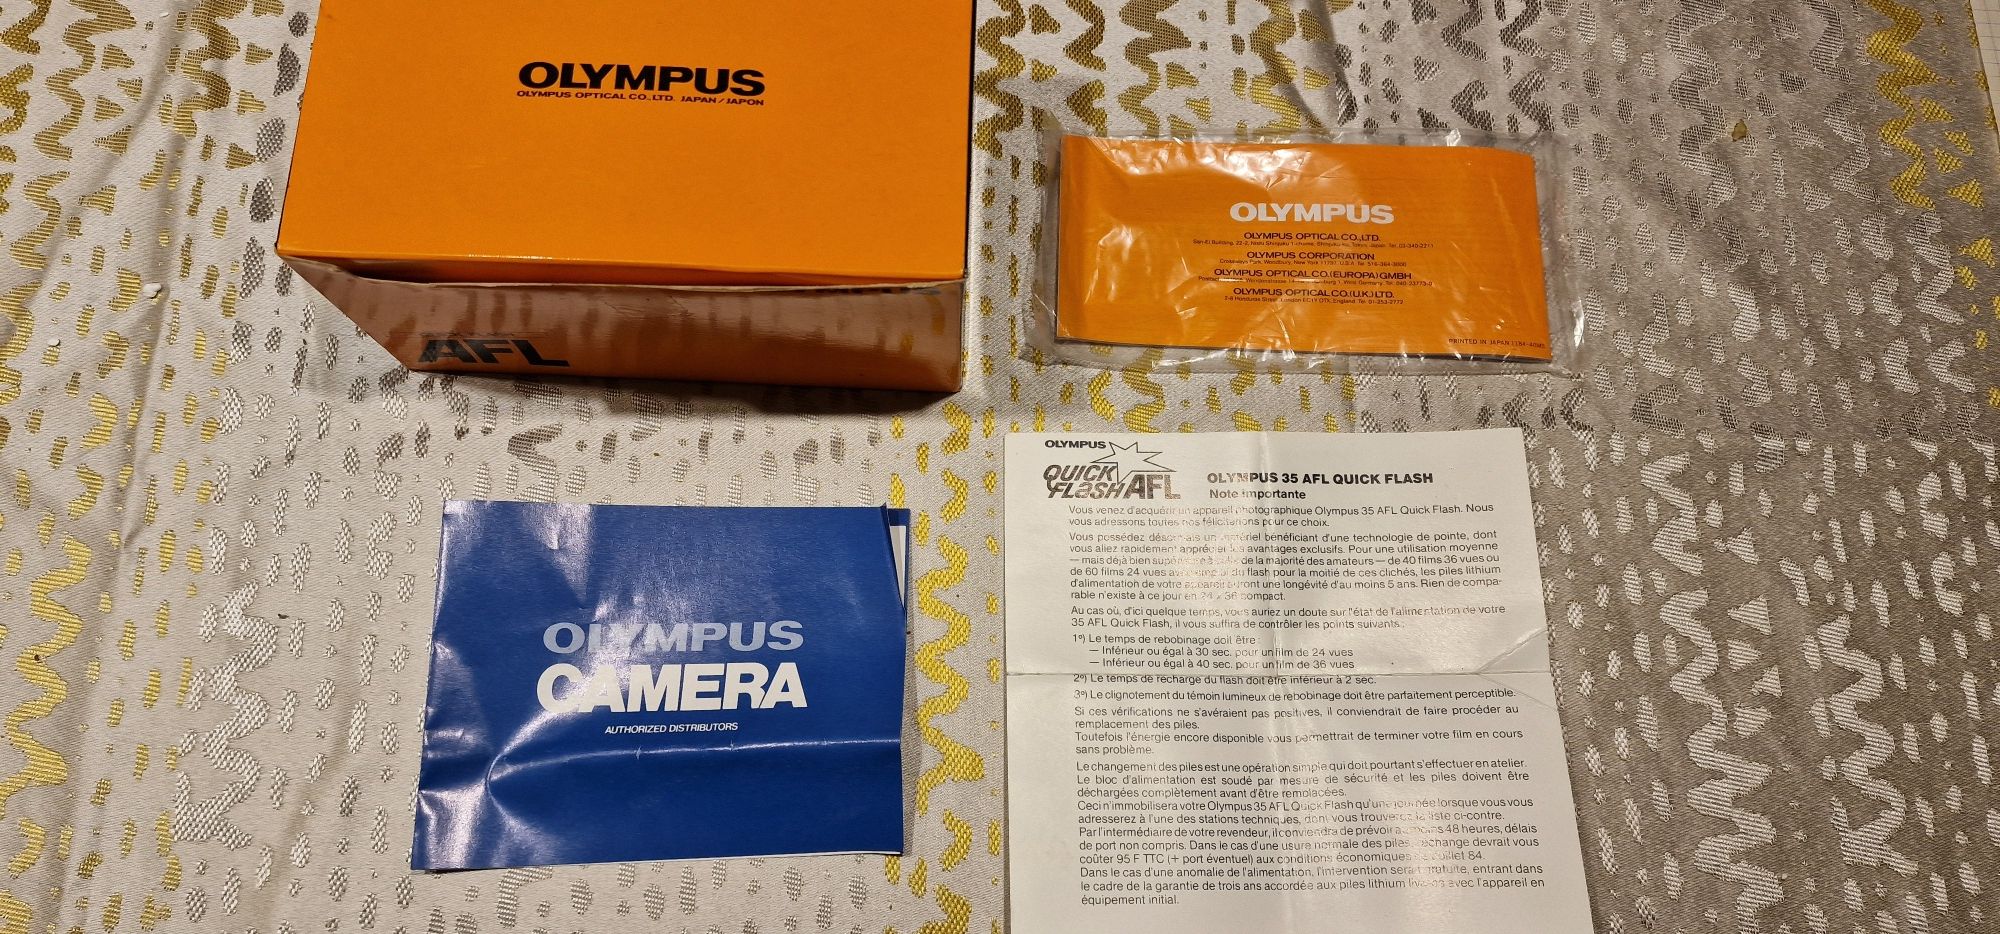 Maquina fotografica Olympus Zuico 38mm